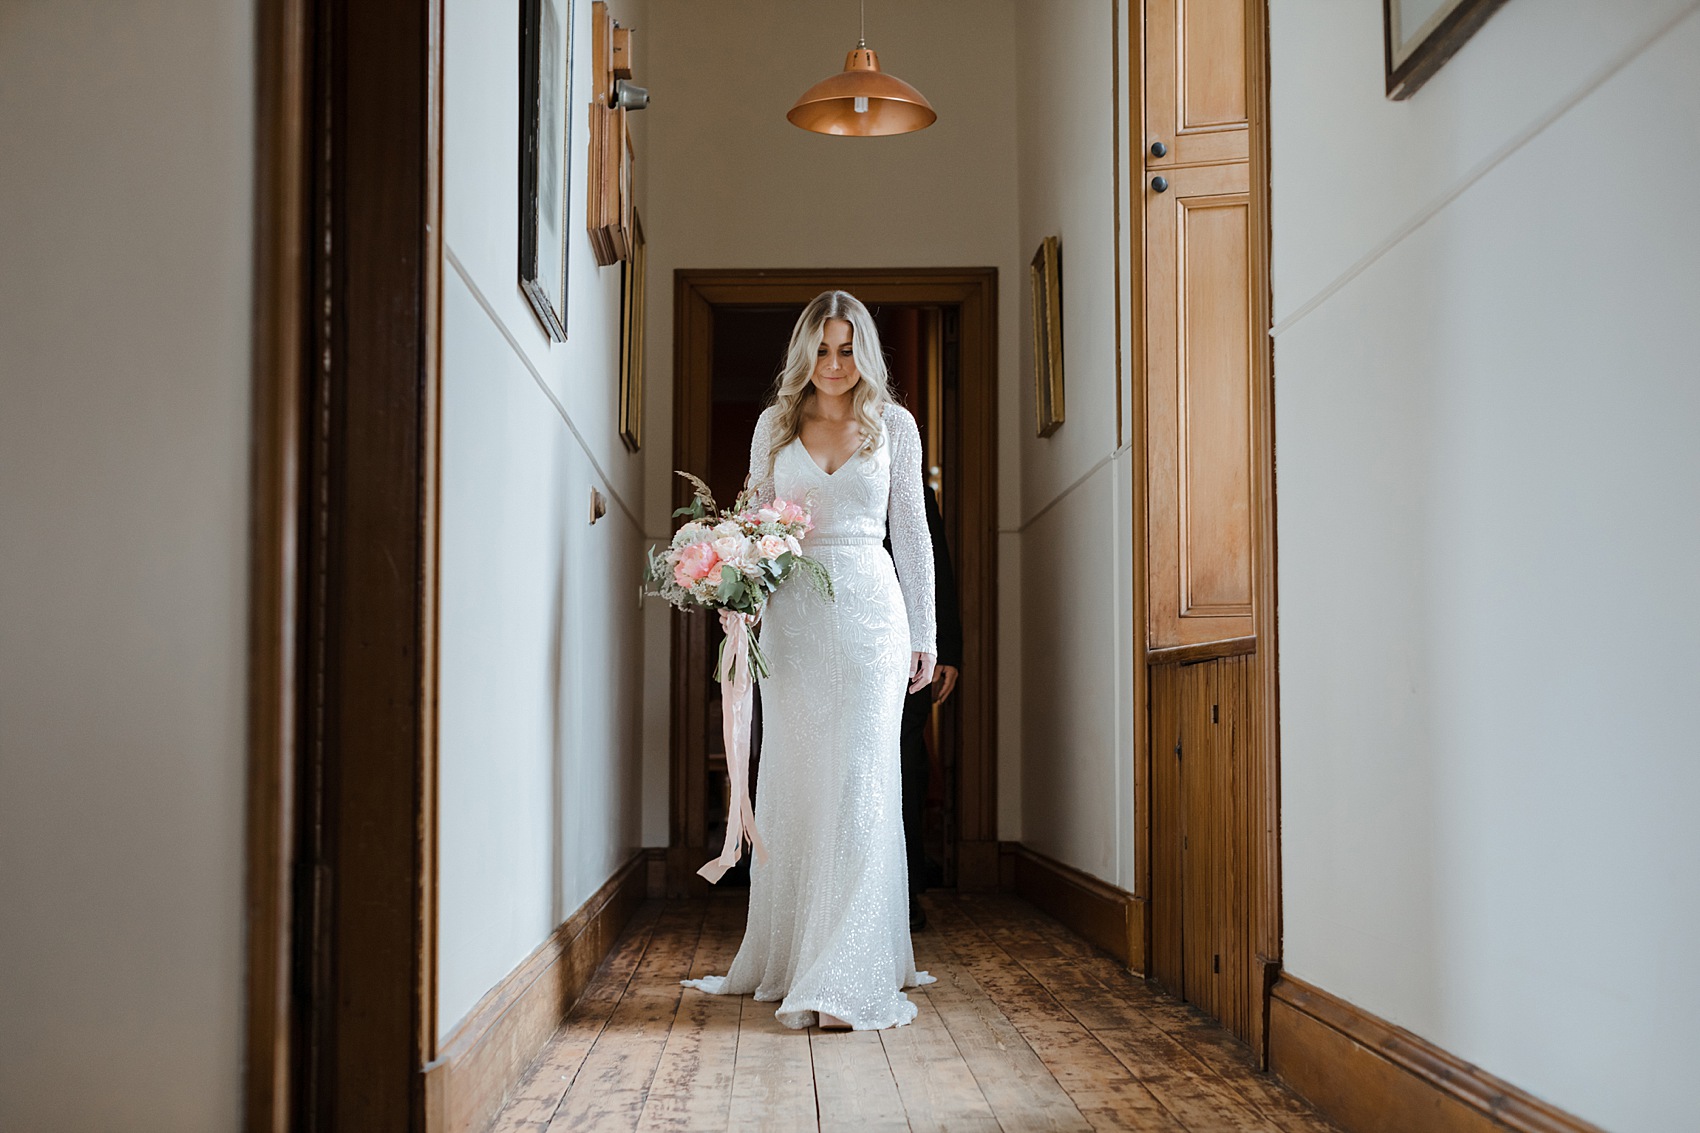 Karen Willis Holmes bride Errol Estate wedding 16